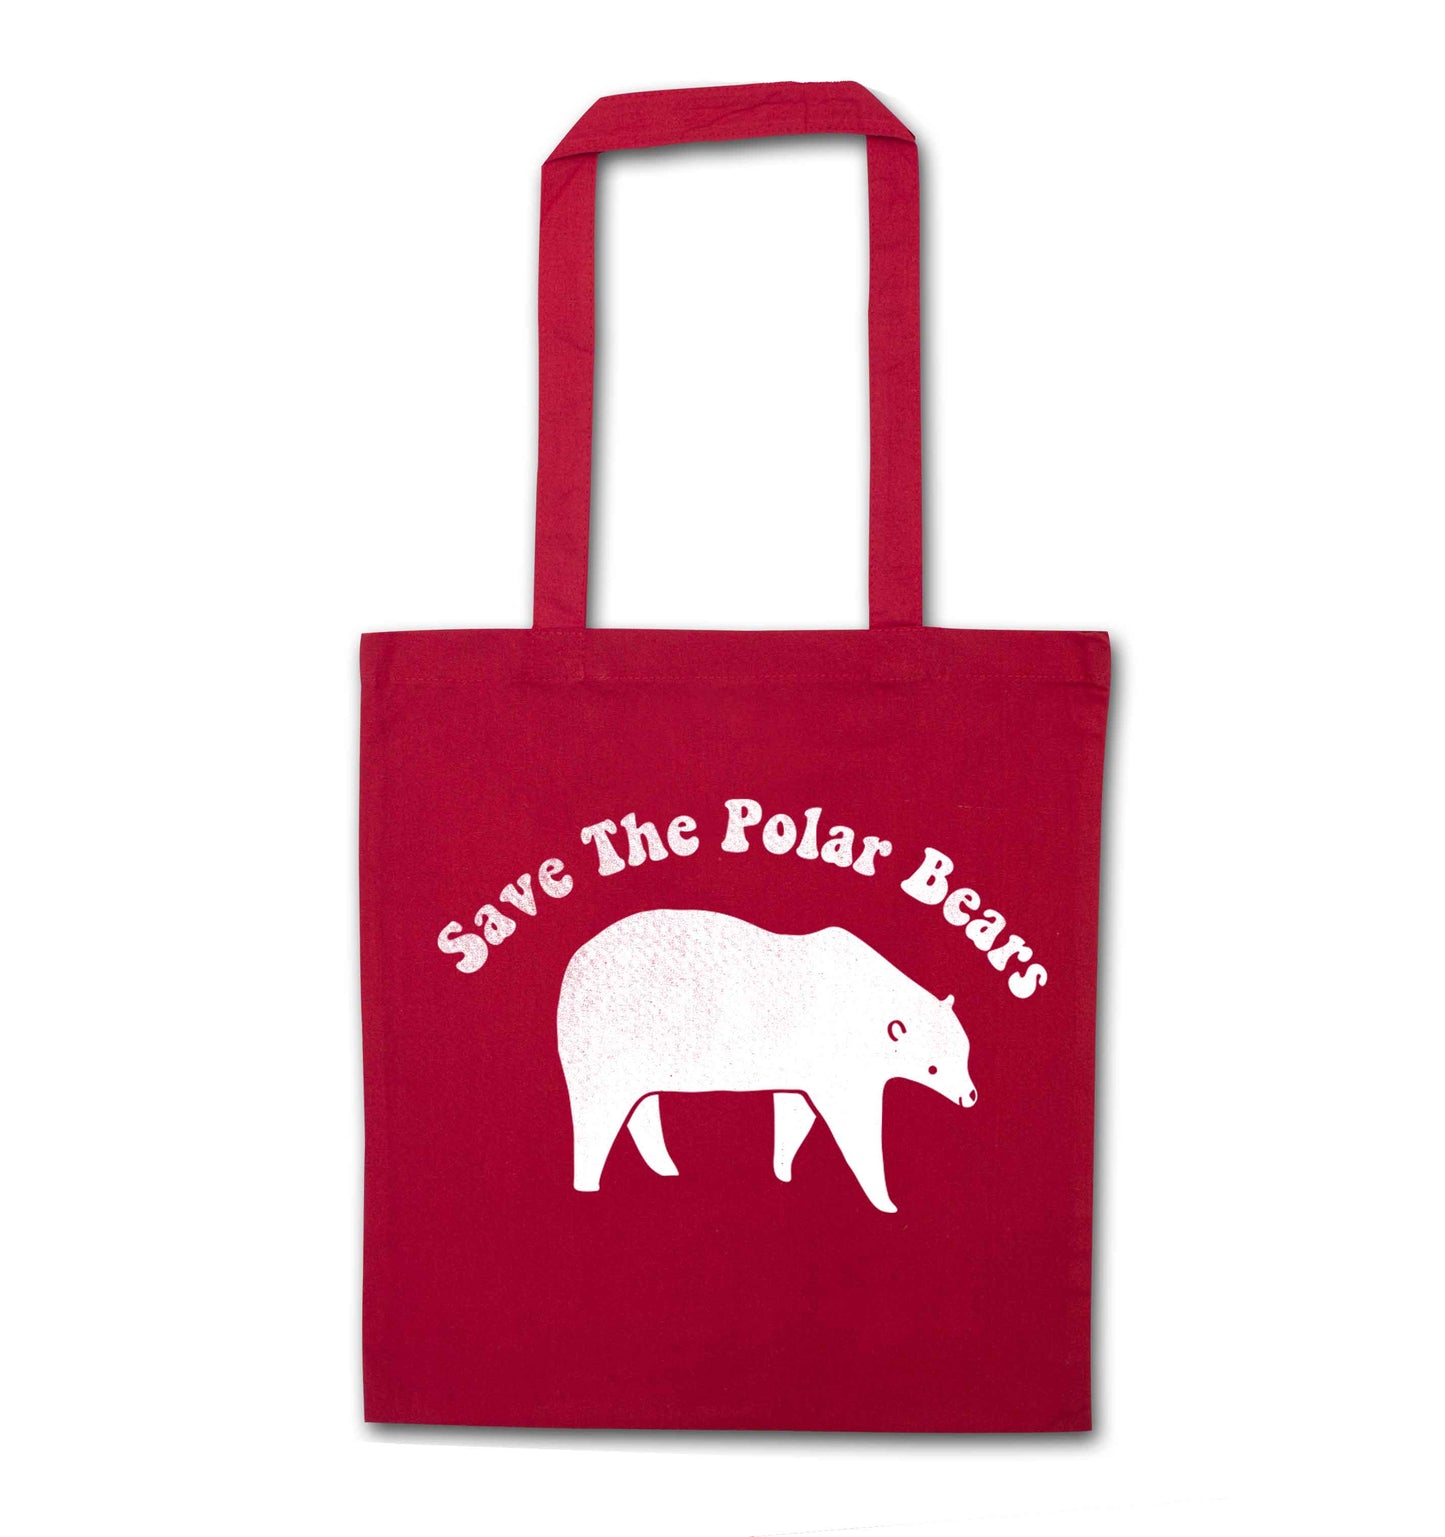 Save The Polar Bears red tote bag